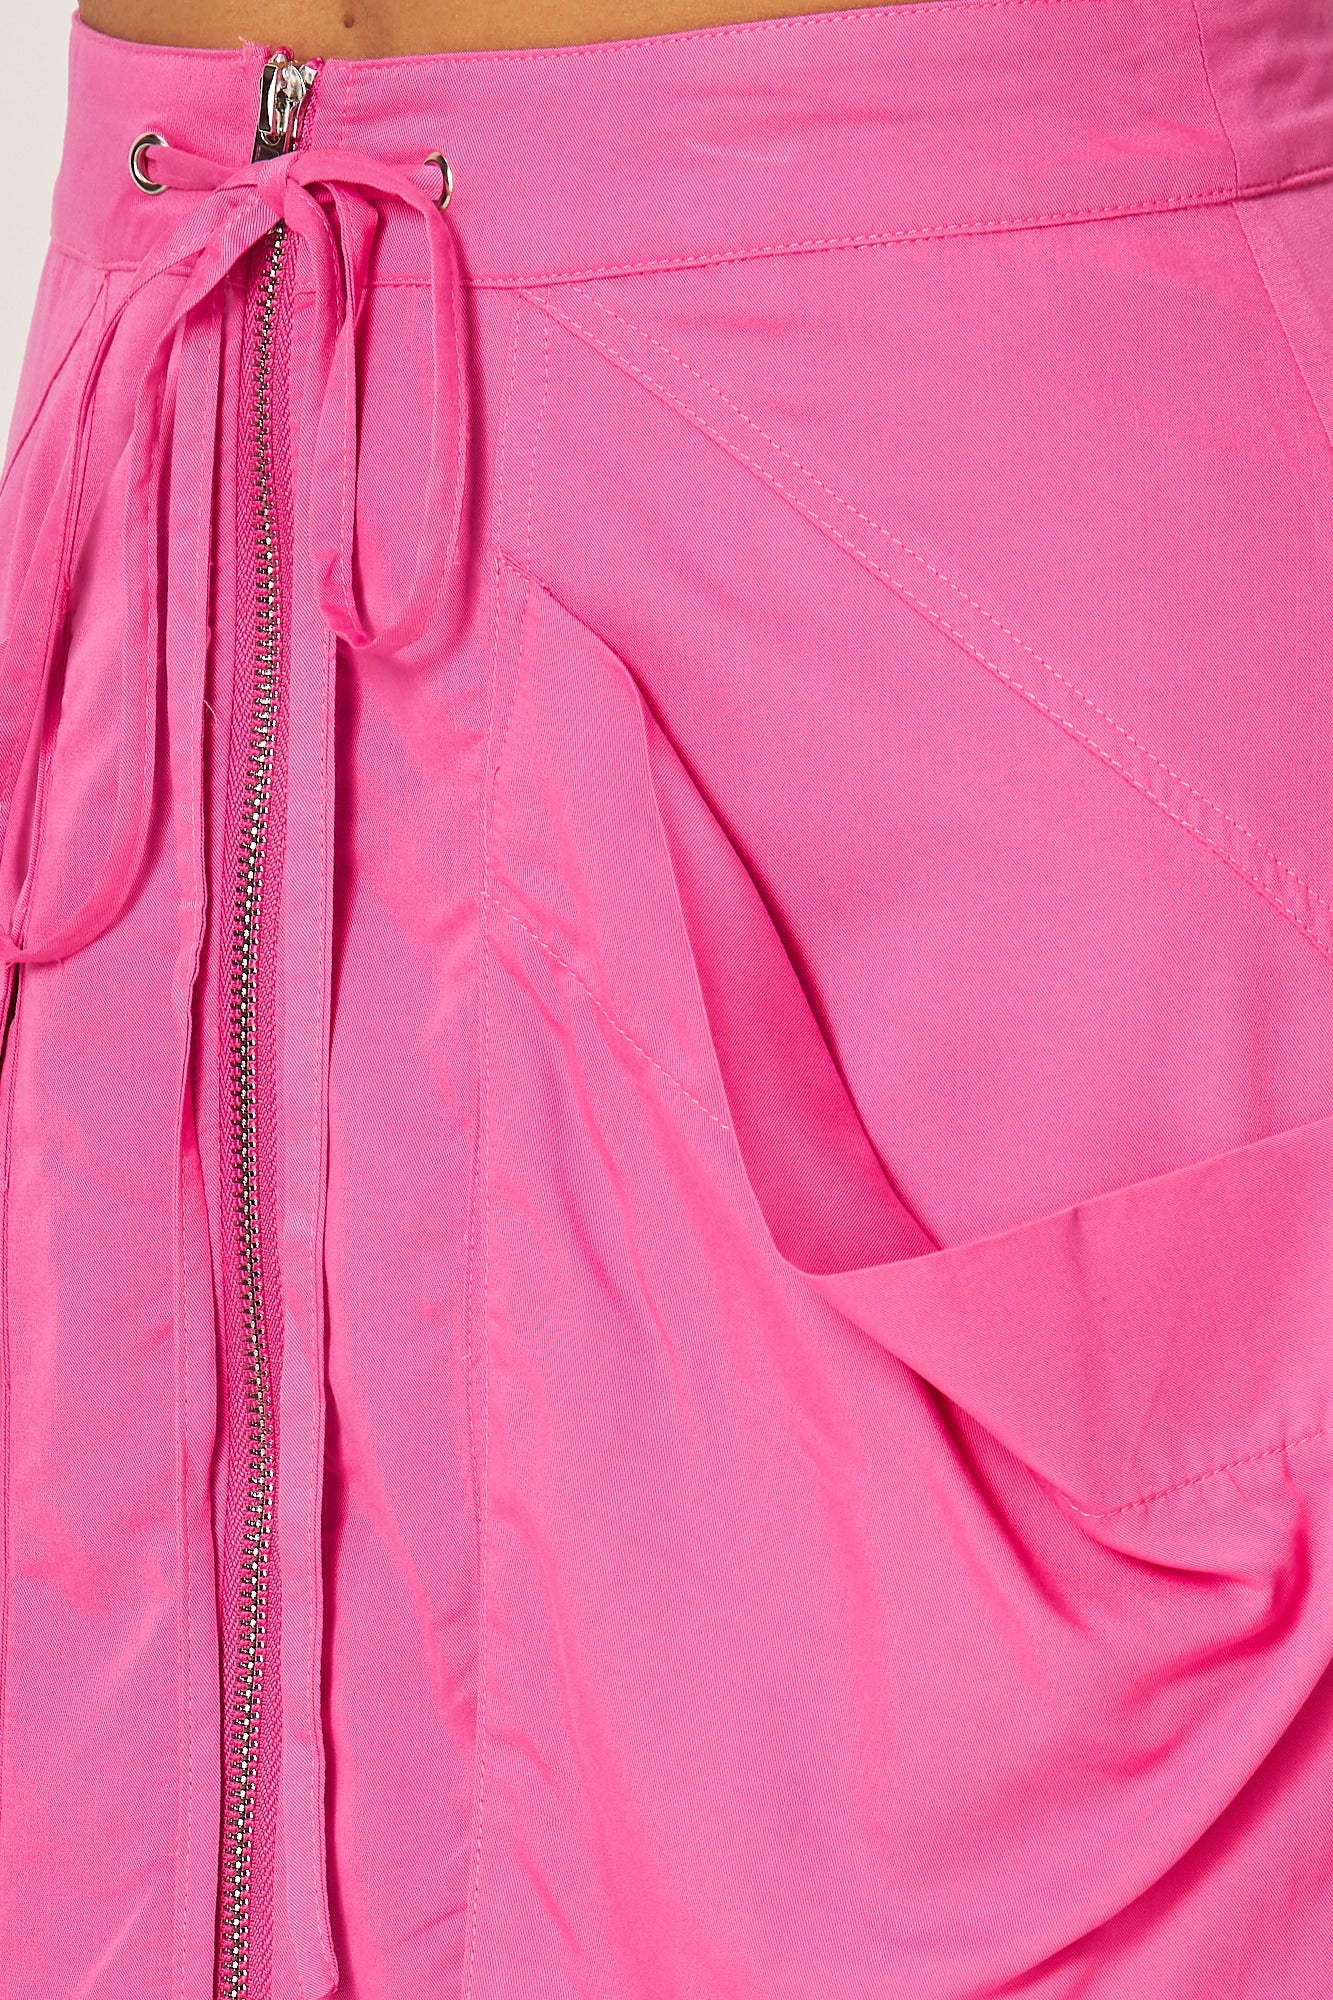 Karol High Low A-Line Zipper Midi Skirt